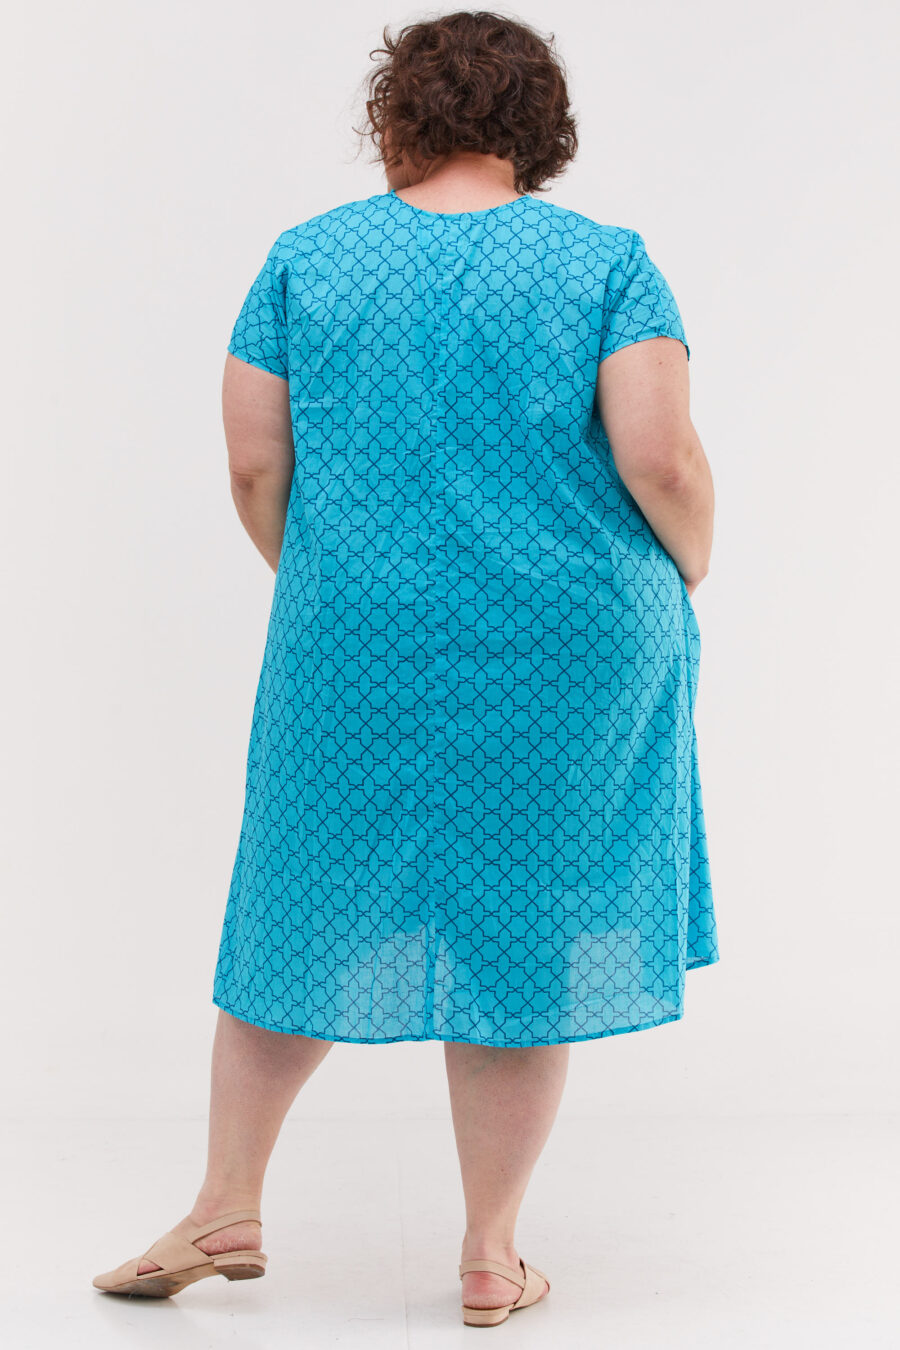 Aiya’le dress | Uniquely designed midi oversize dress - Tourqouise Scandinavian print, tourqouise dress with dark blue geometric print by comfort zone boutique